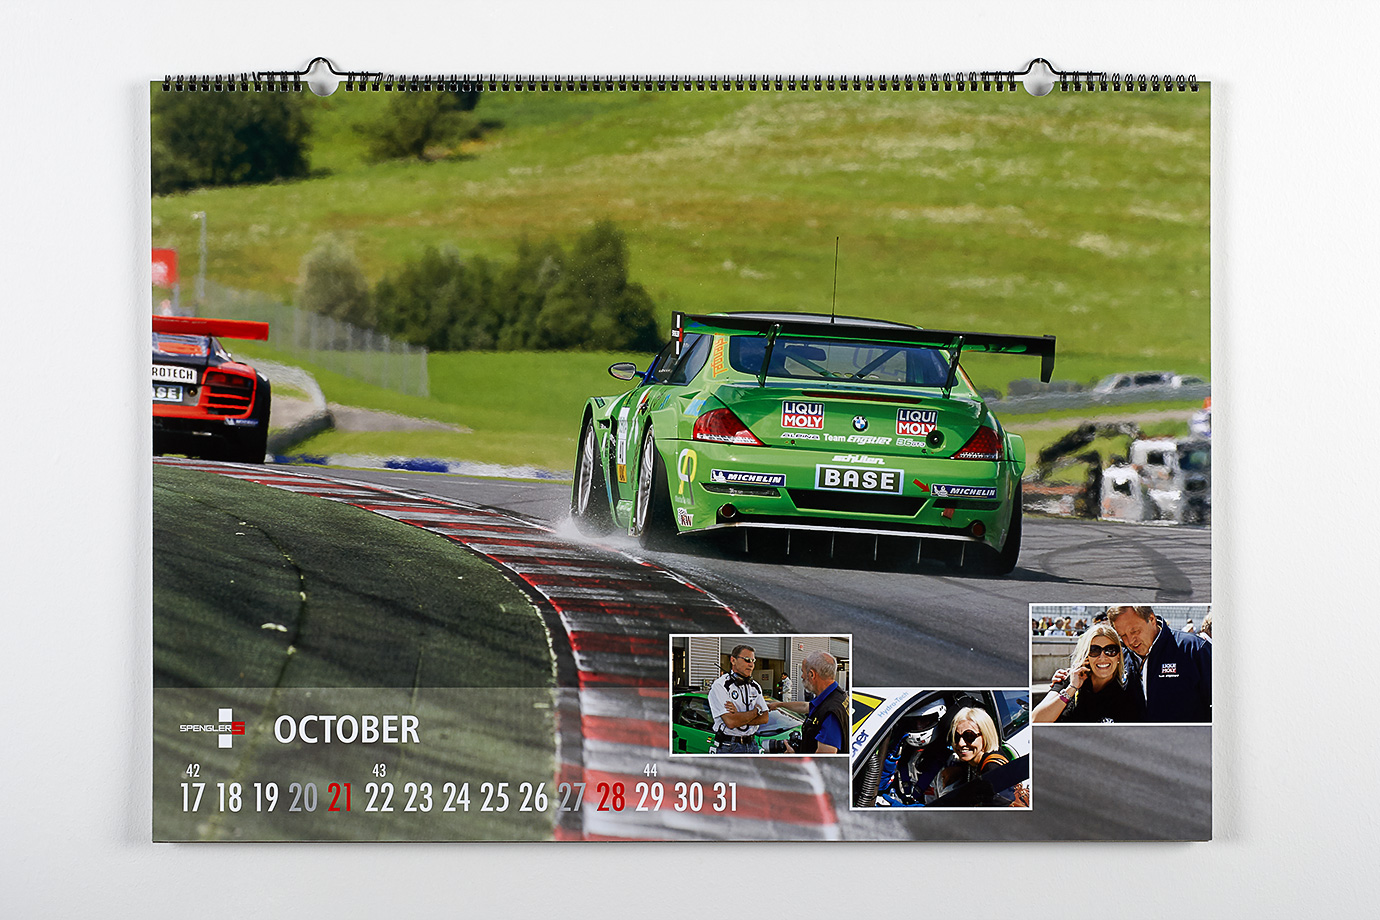 Jahreskalender mit Rennsportmotiven, Monatsblatt Oktober